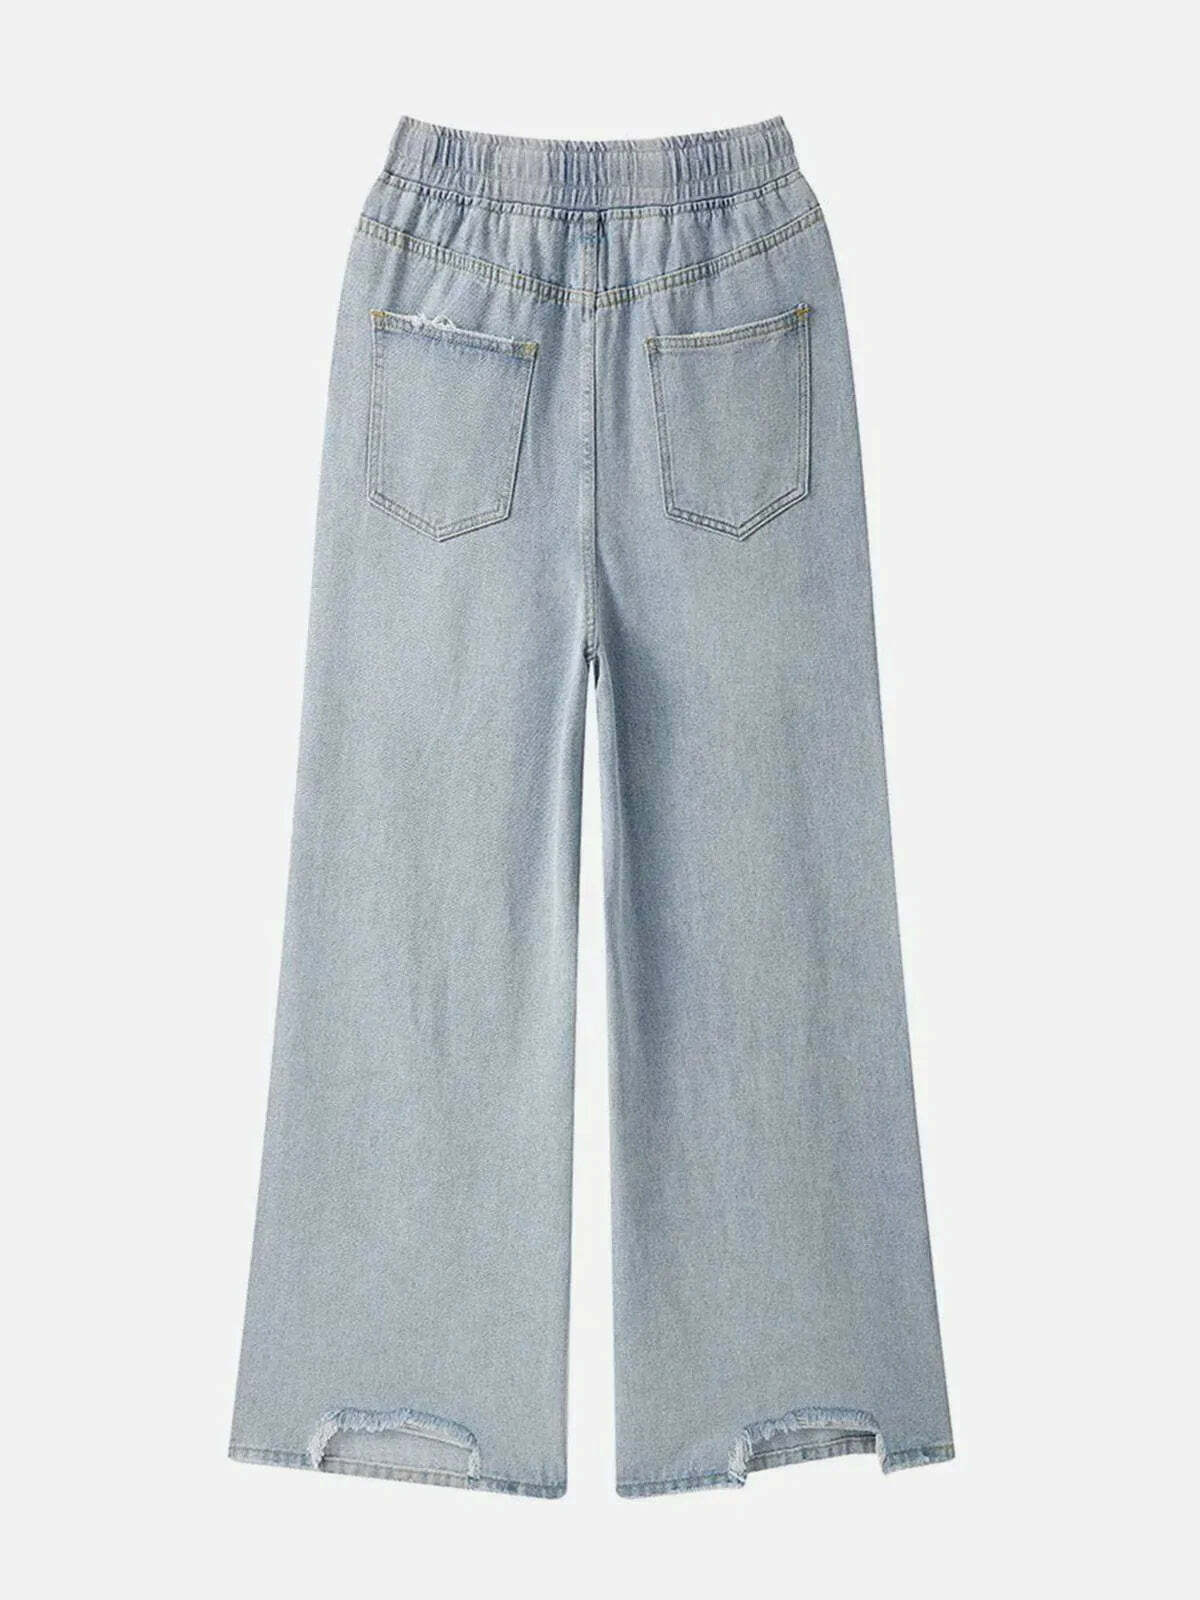 edgy wide leg denim pants trendy & ripped streetwear 8514